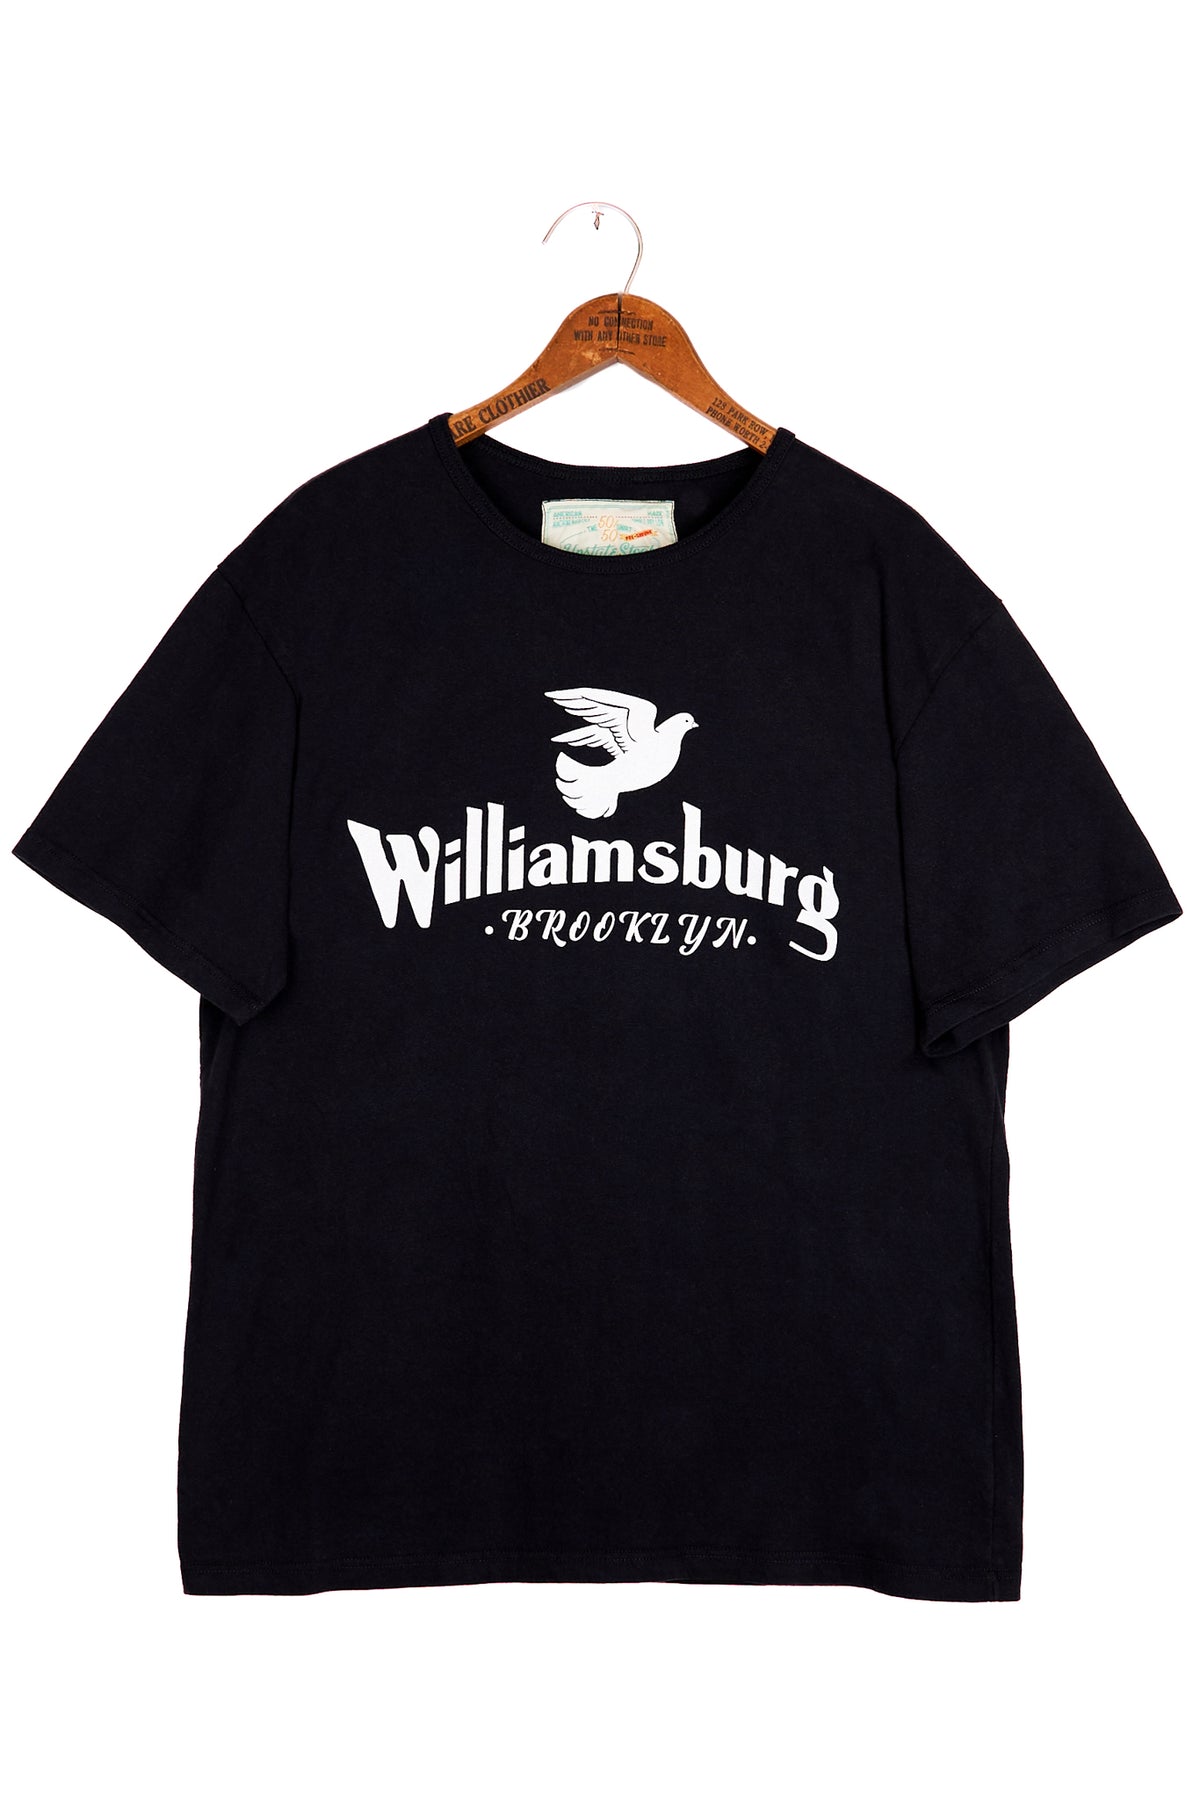 The 50/50 Shirt - CLASSIC TEE - Williamsburg Dove